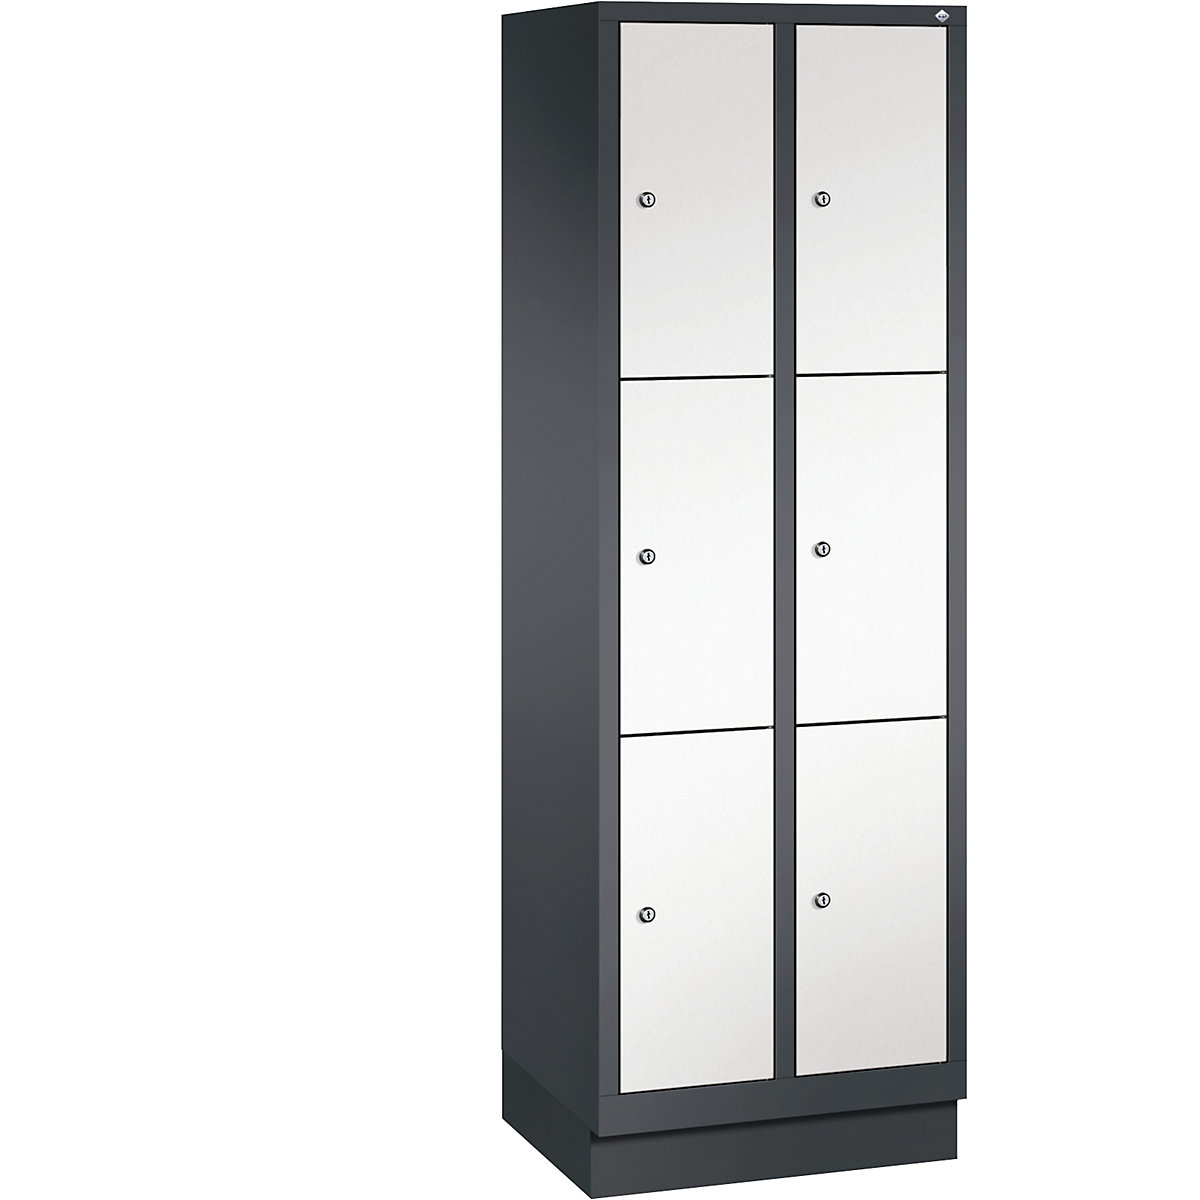 CLASSIC locker unit with plinth – C+P, 2 compartments, 3 shelf compartments each, compartment width 300 mm, black grey / traffic white-6